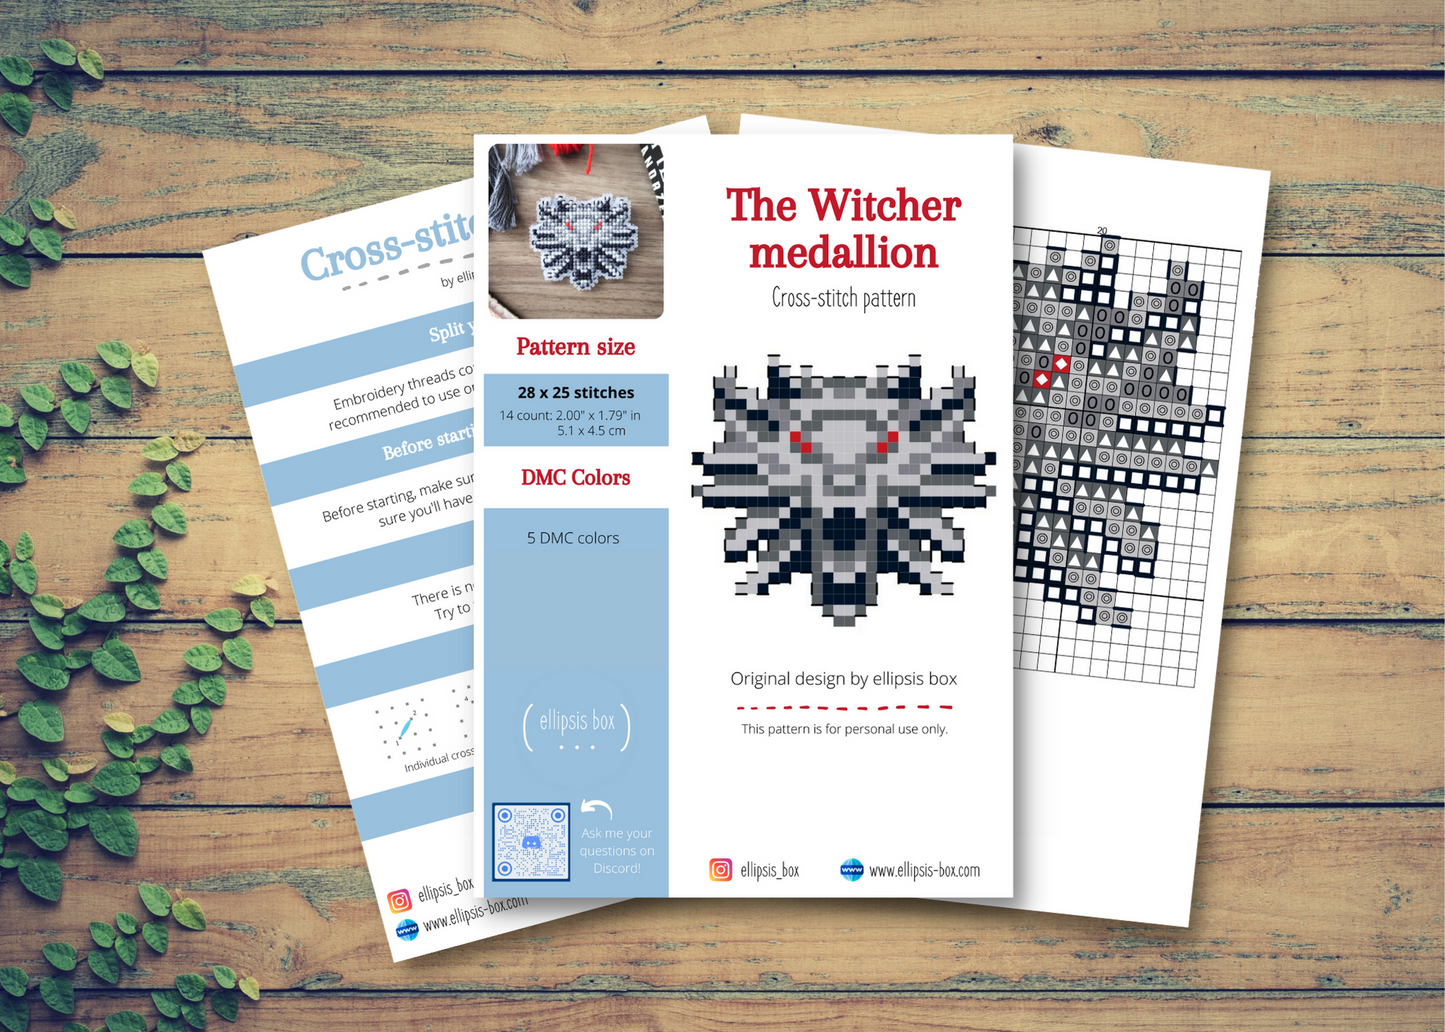 The Witcher 3 medallion - Cross stitch magnet kit